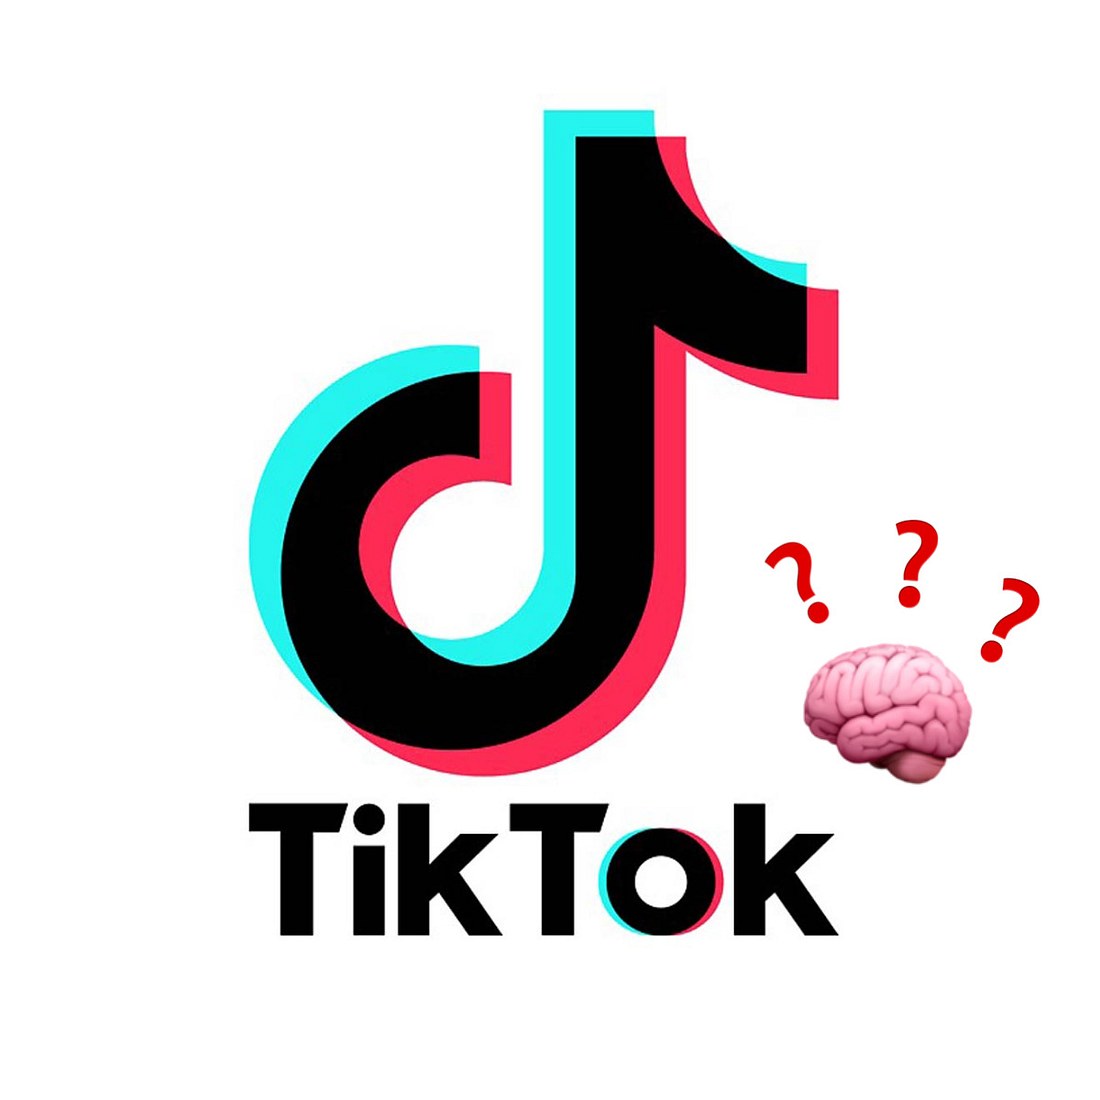 „Tiktok“-Jugendsprache: geheime Sex-Bedeutung des Hirn-Emojis